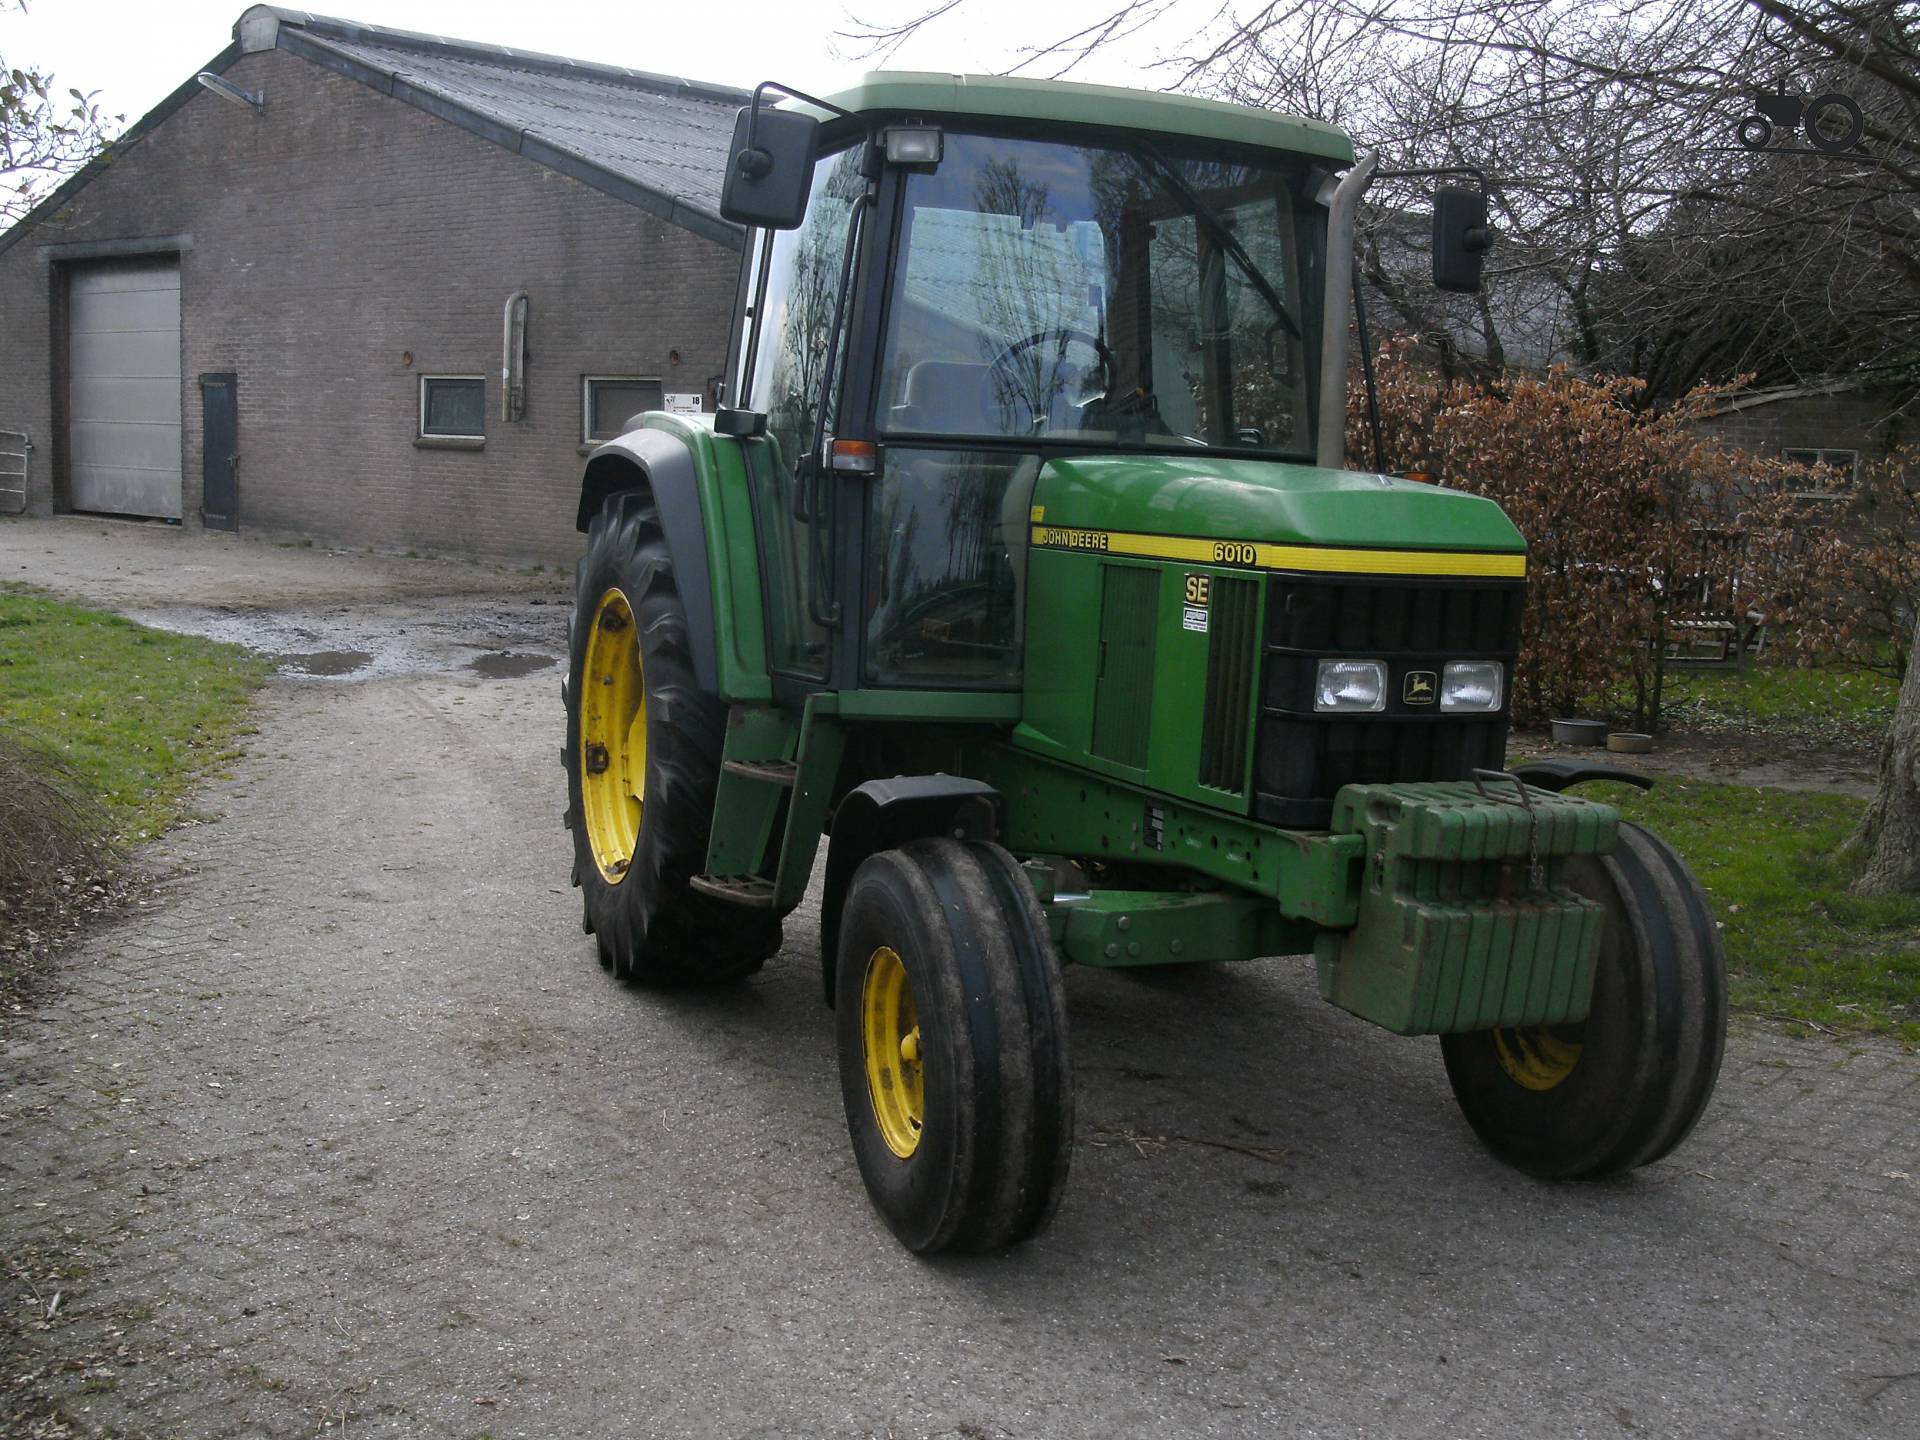 John Deere 6010 Se France Tracteur Image 465633 0188